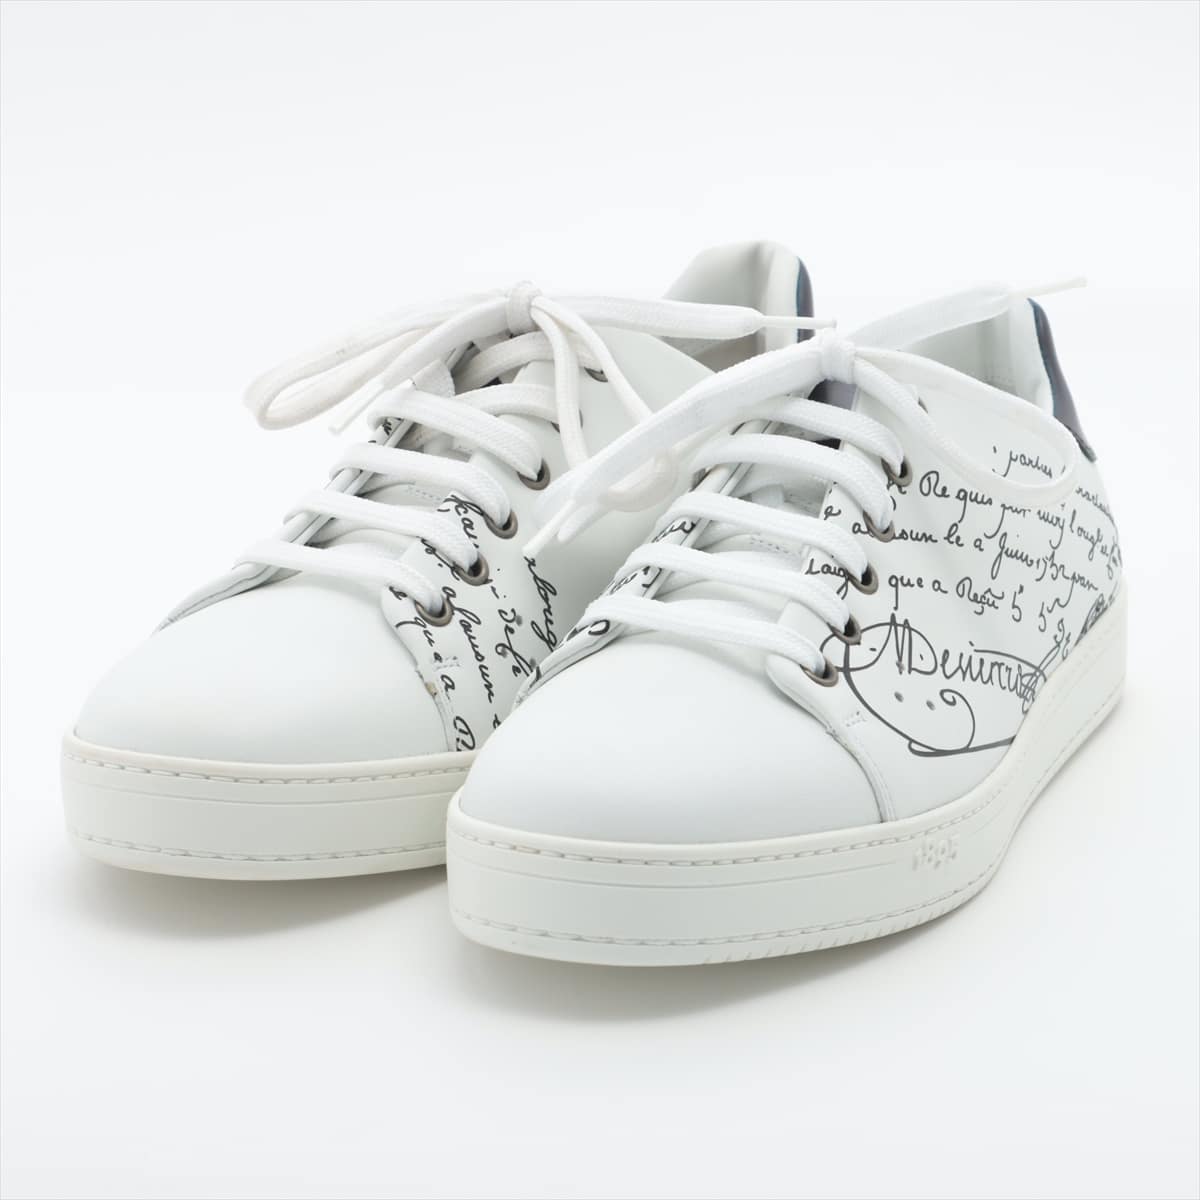 Berluti Leather Sneakers 7 1/2 Men's White playtime Scrit S5304-001 PALERMO 2